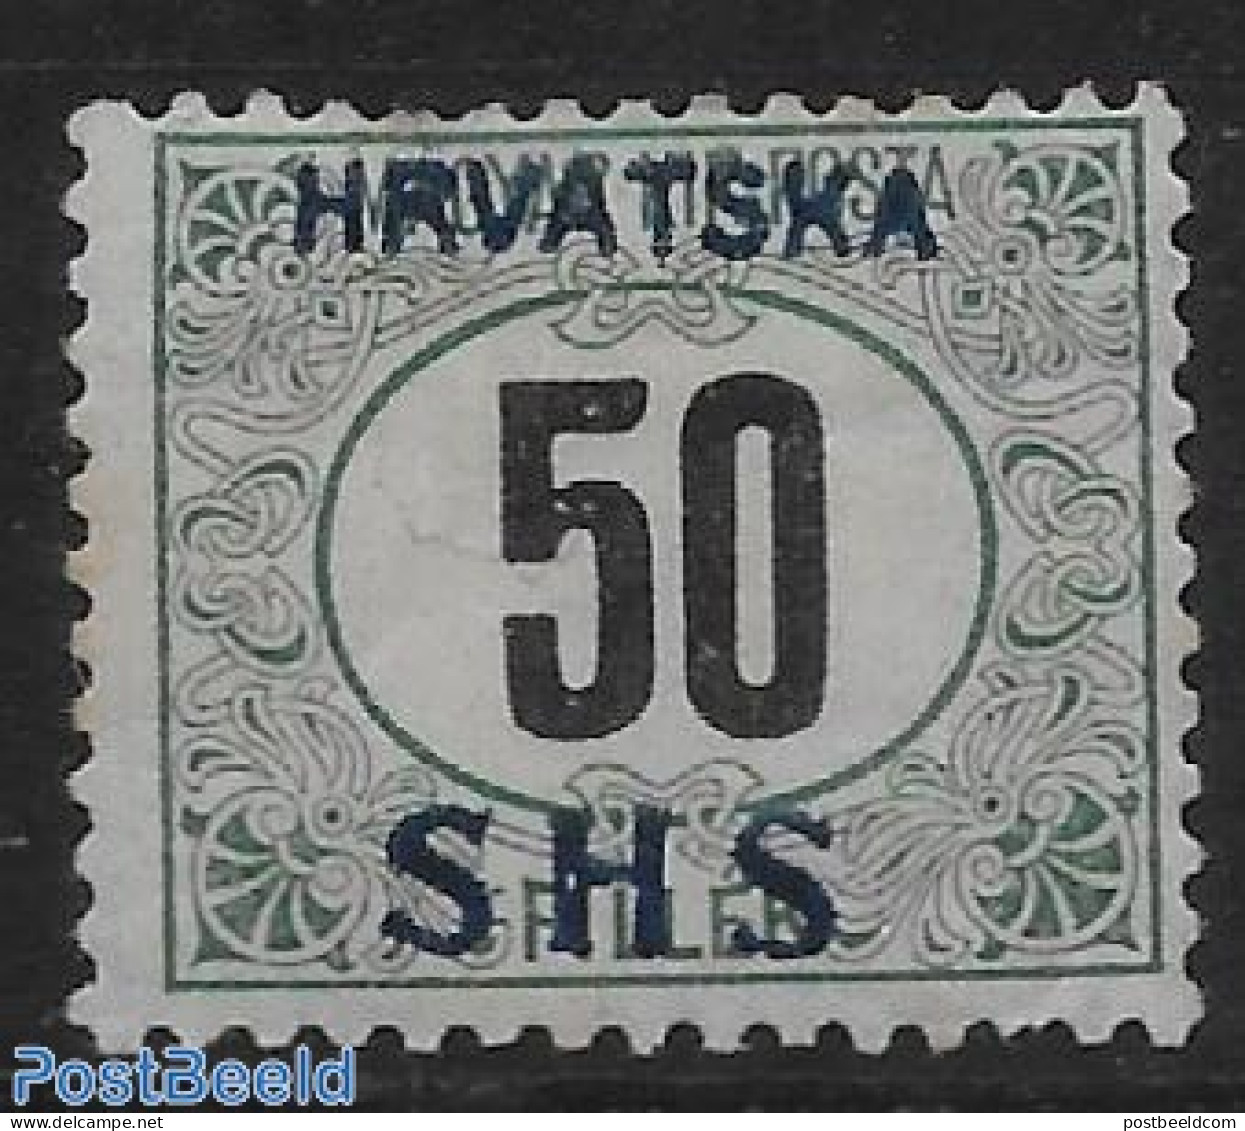 Yugoslavia 1918 Stamp Out Of Set. 1 V., Unused (hinged) - Ungebraucht